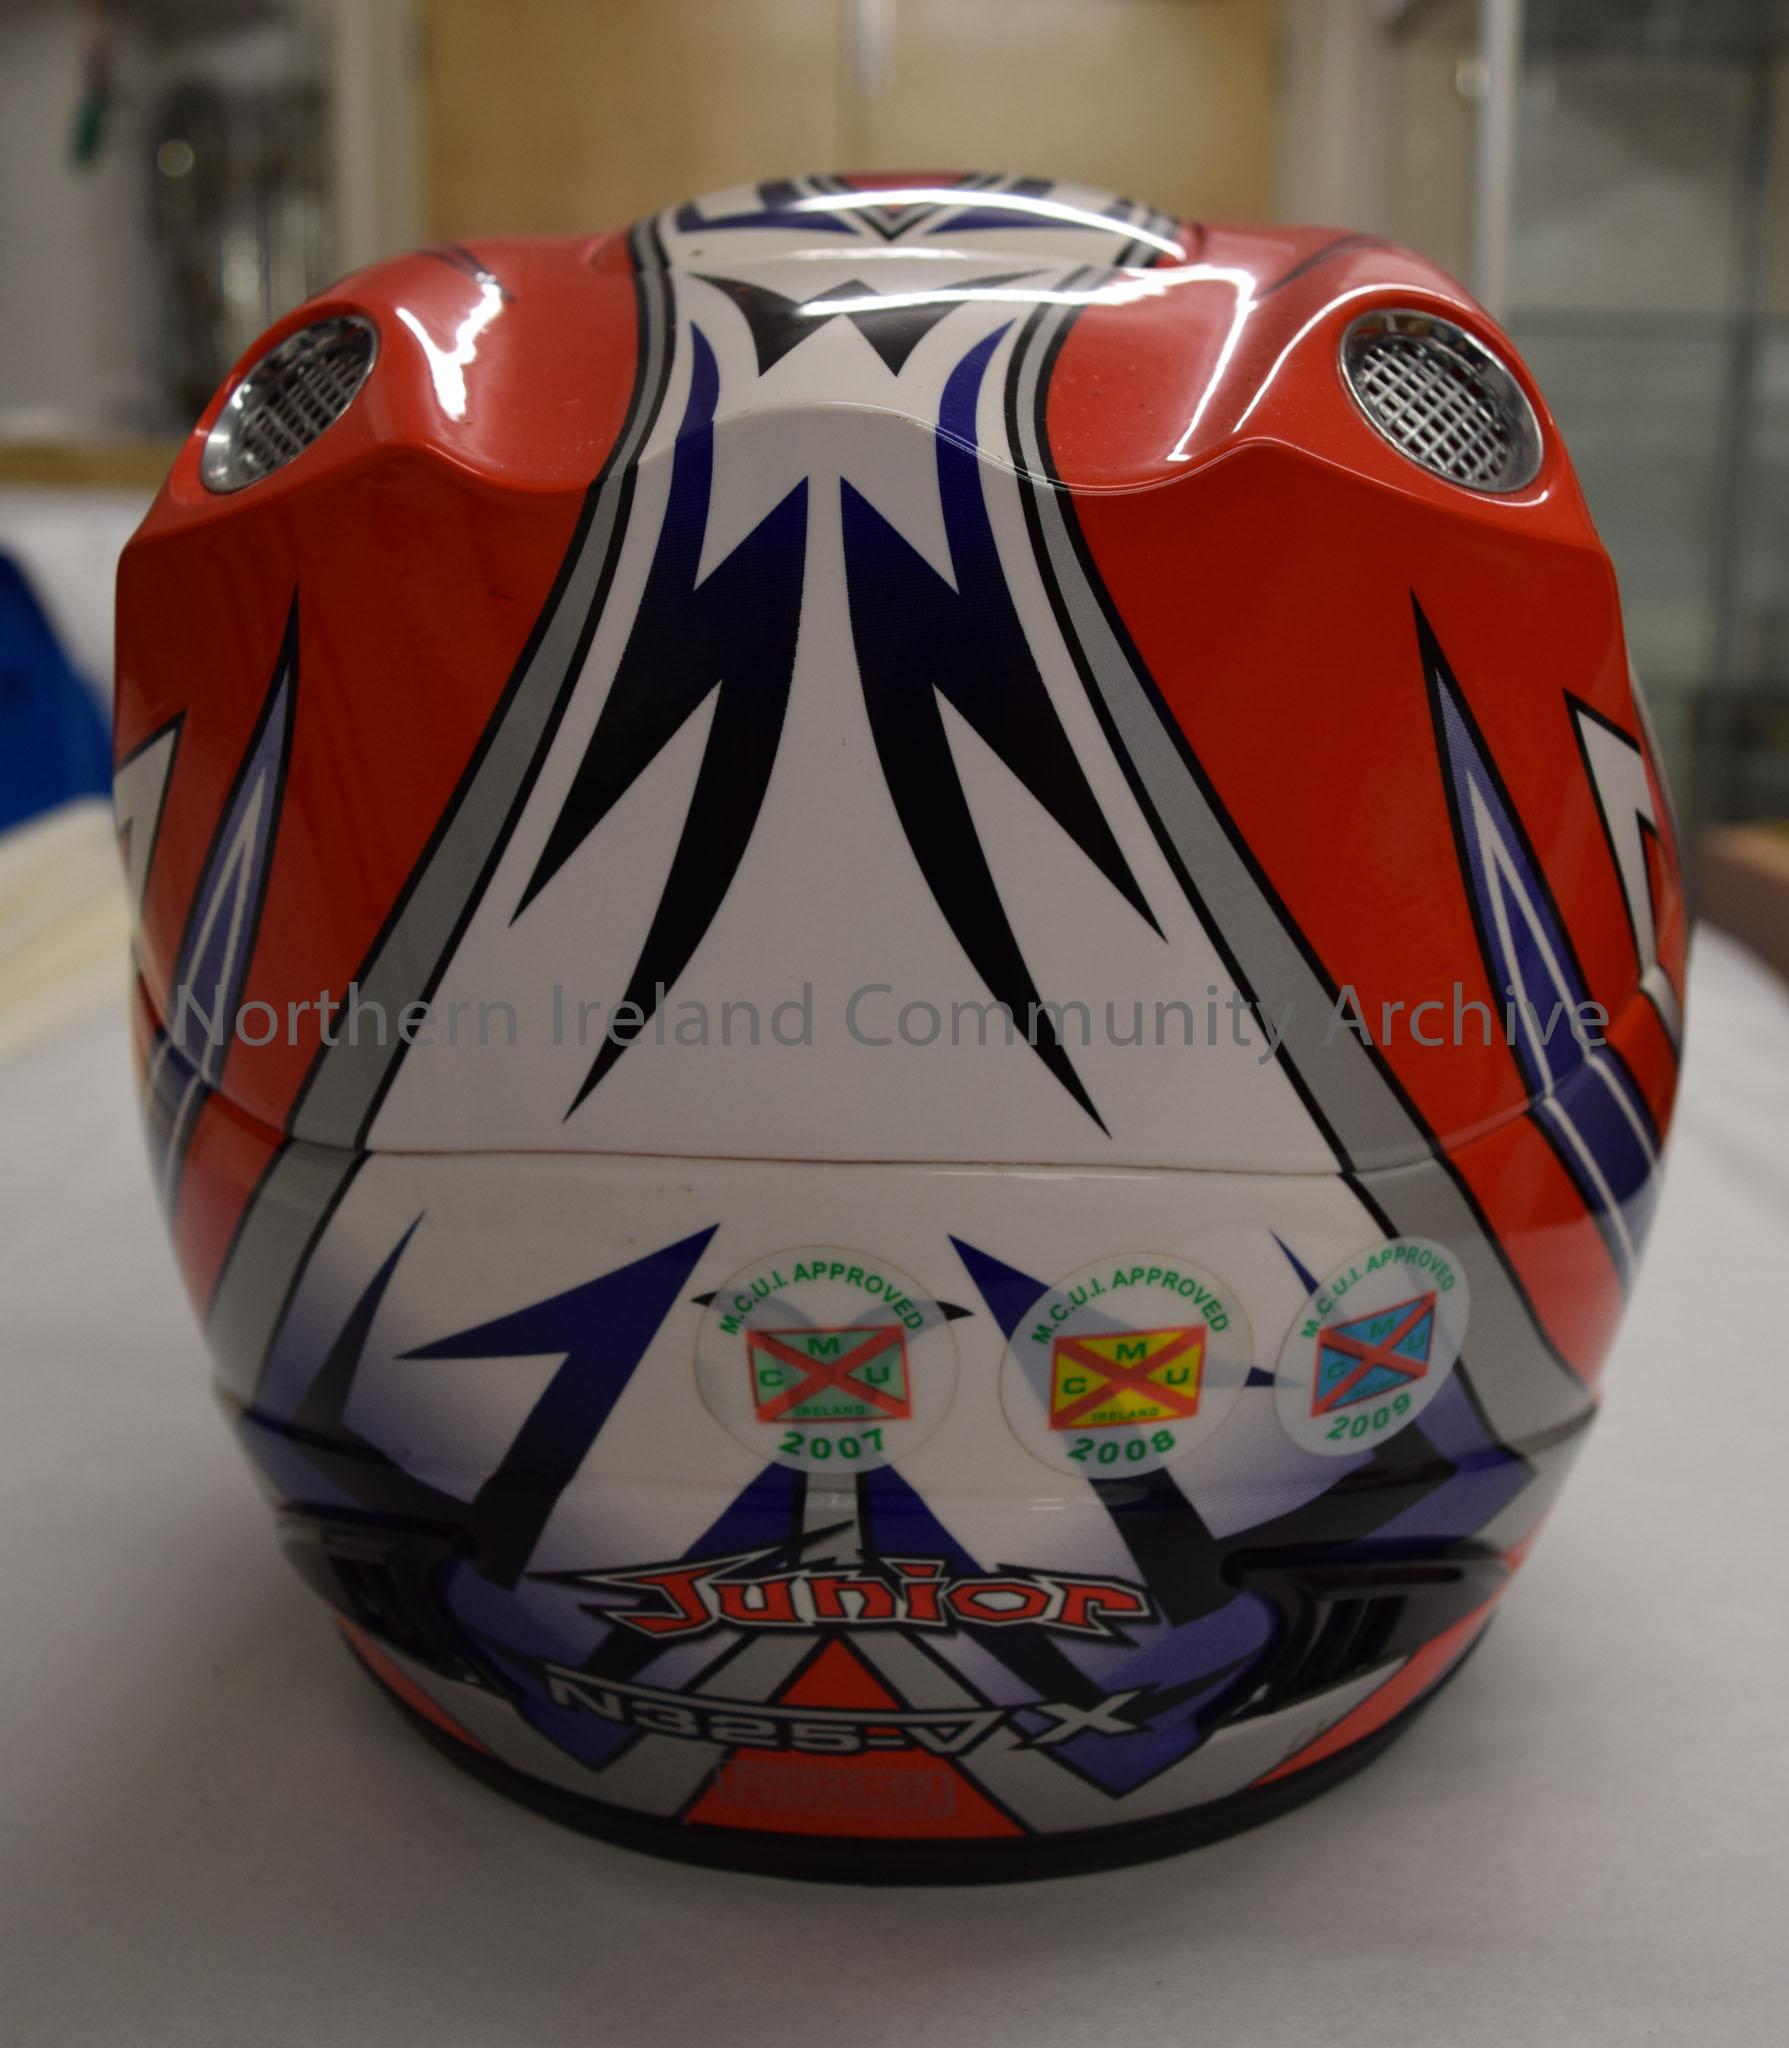 Nitro Racing motorcycle helmet belonging to William Morrell. Red helmet with white, grey and dark blue pattern. – 2016.50 (4)